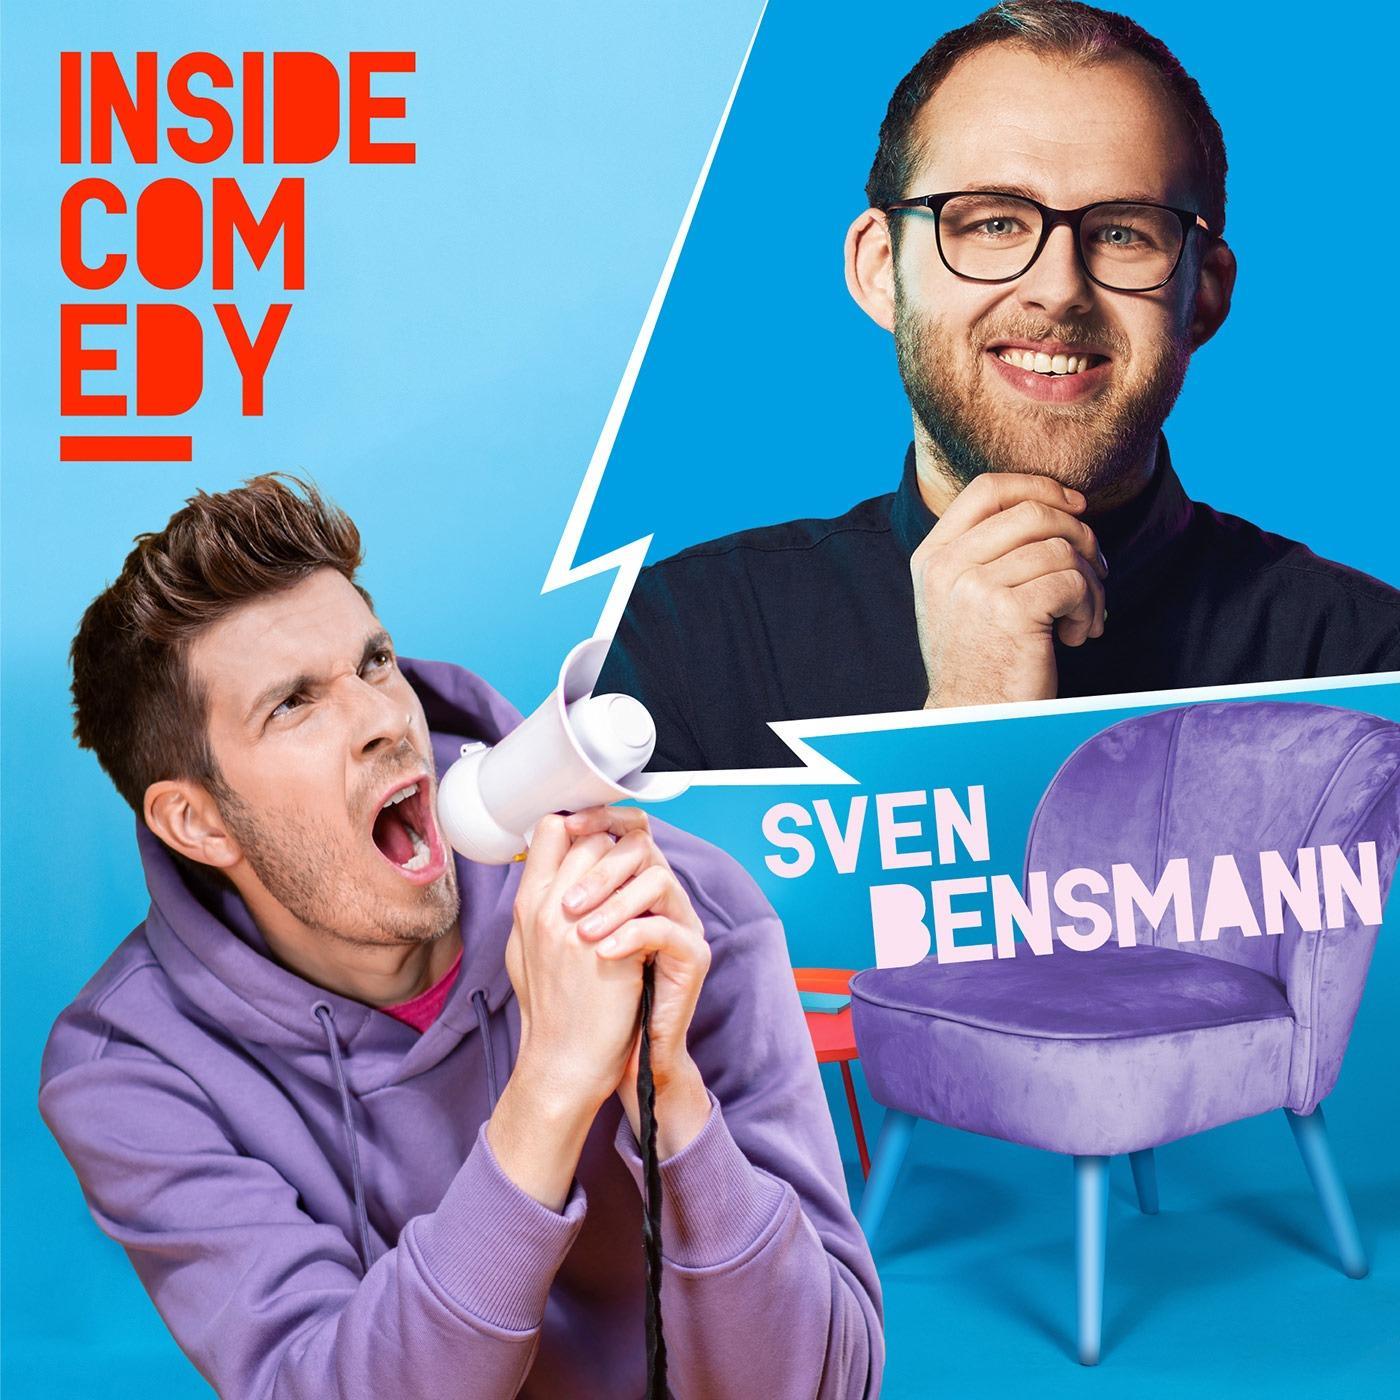 Das große Inside Comedy Finale mit Sven Bensmann!